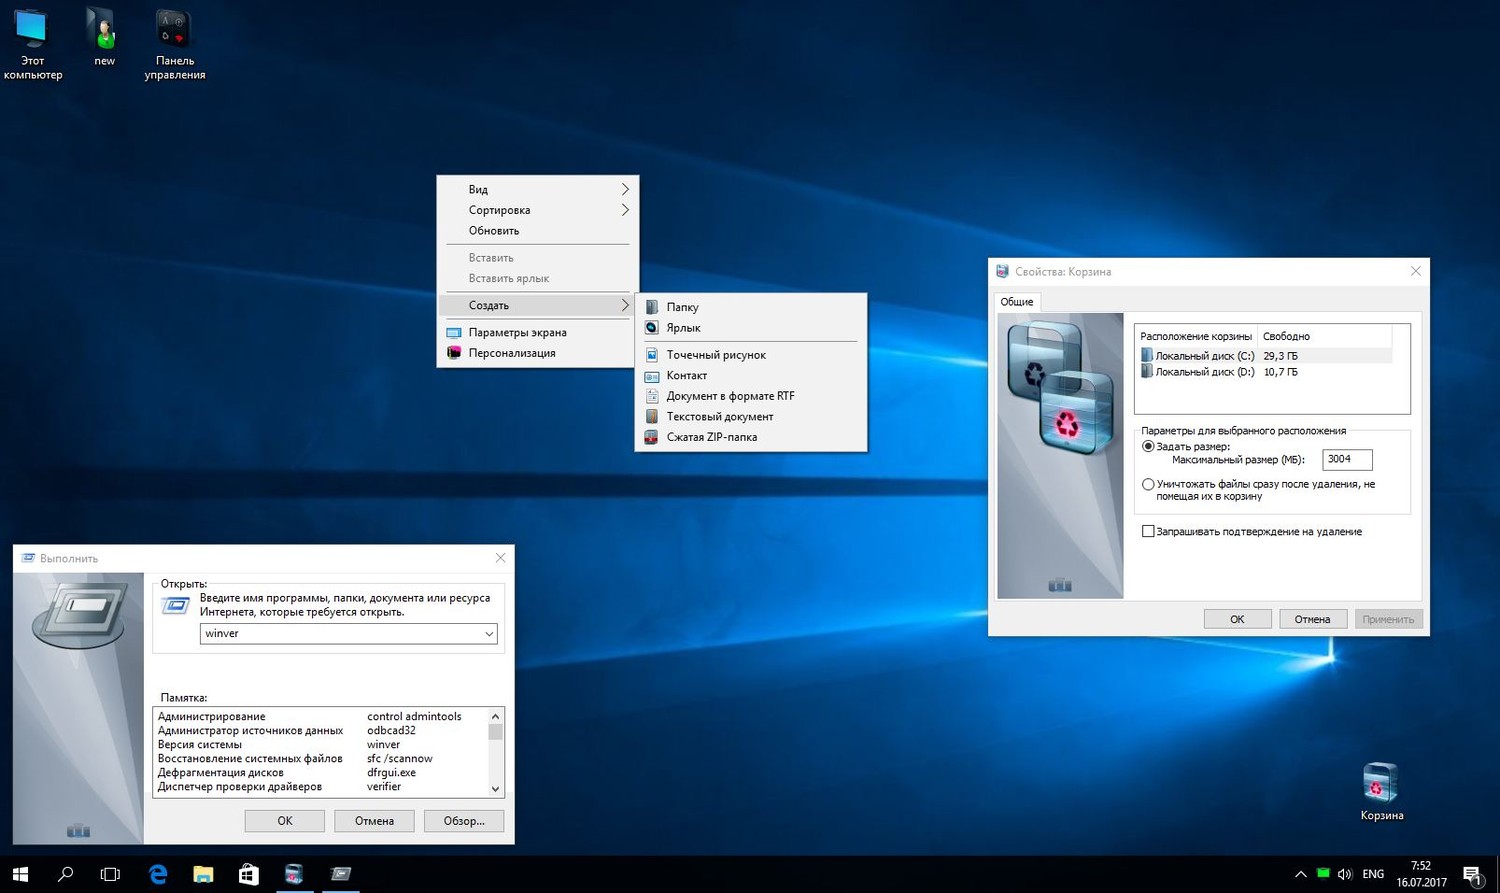 Windows 10 32/64бит корпоративная LTSB 14393.223 V.85.16. Новая версия 32